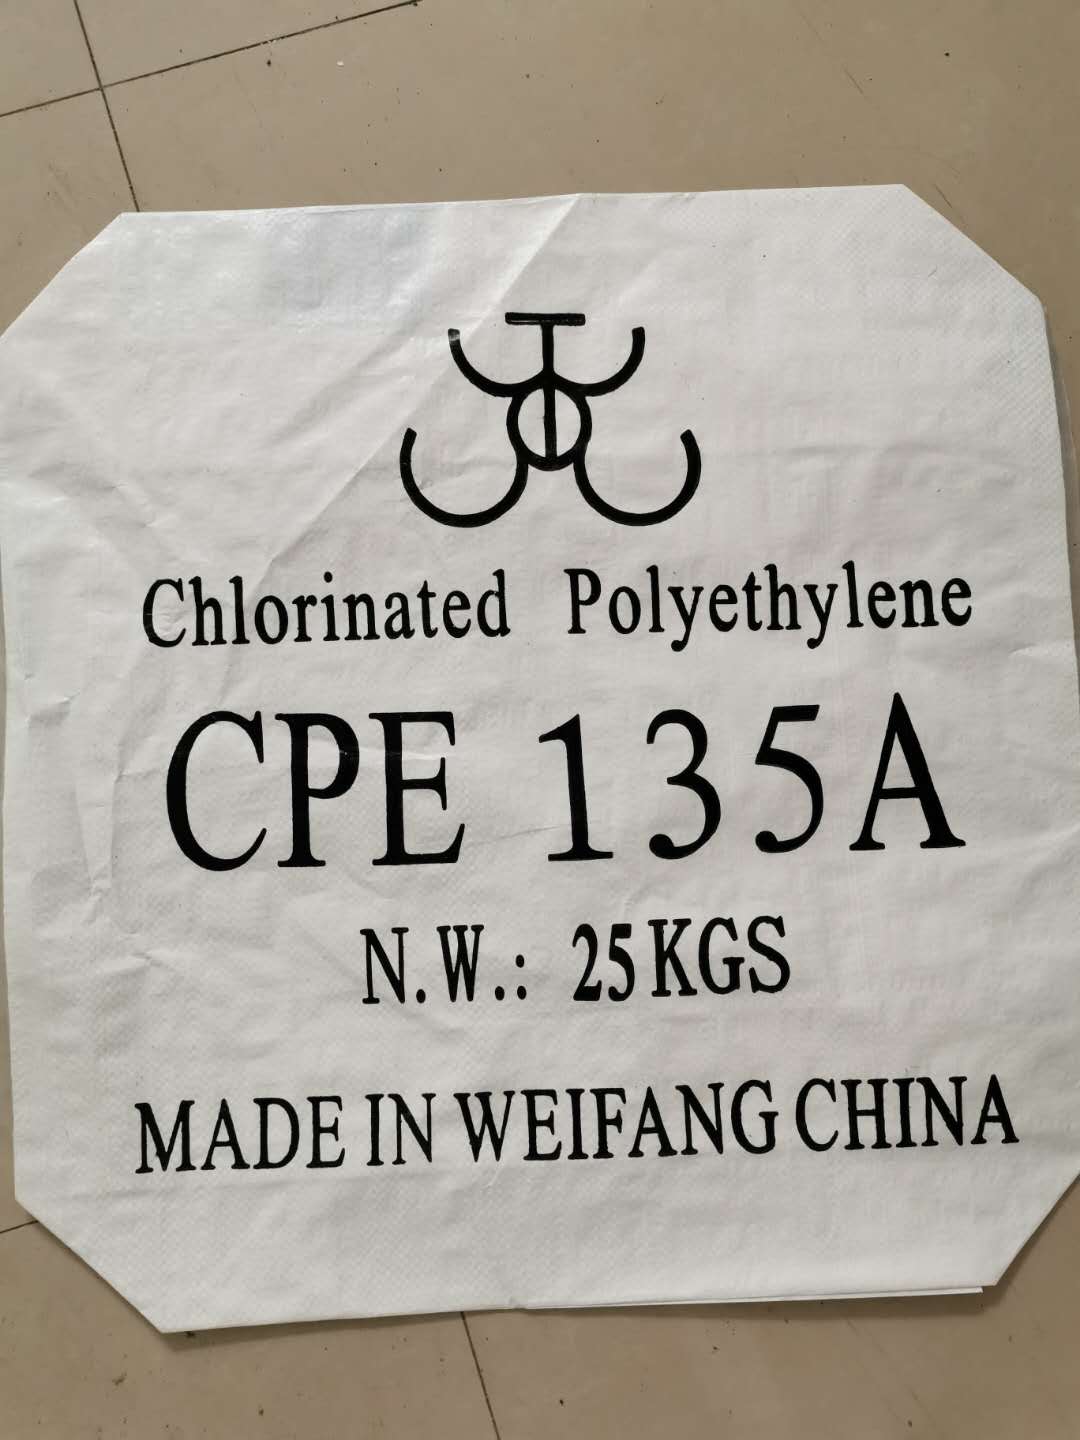 Let me know: x'inhu CPE/chlorinated polyethylene?